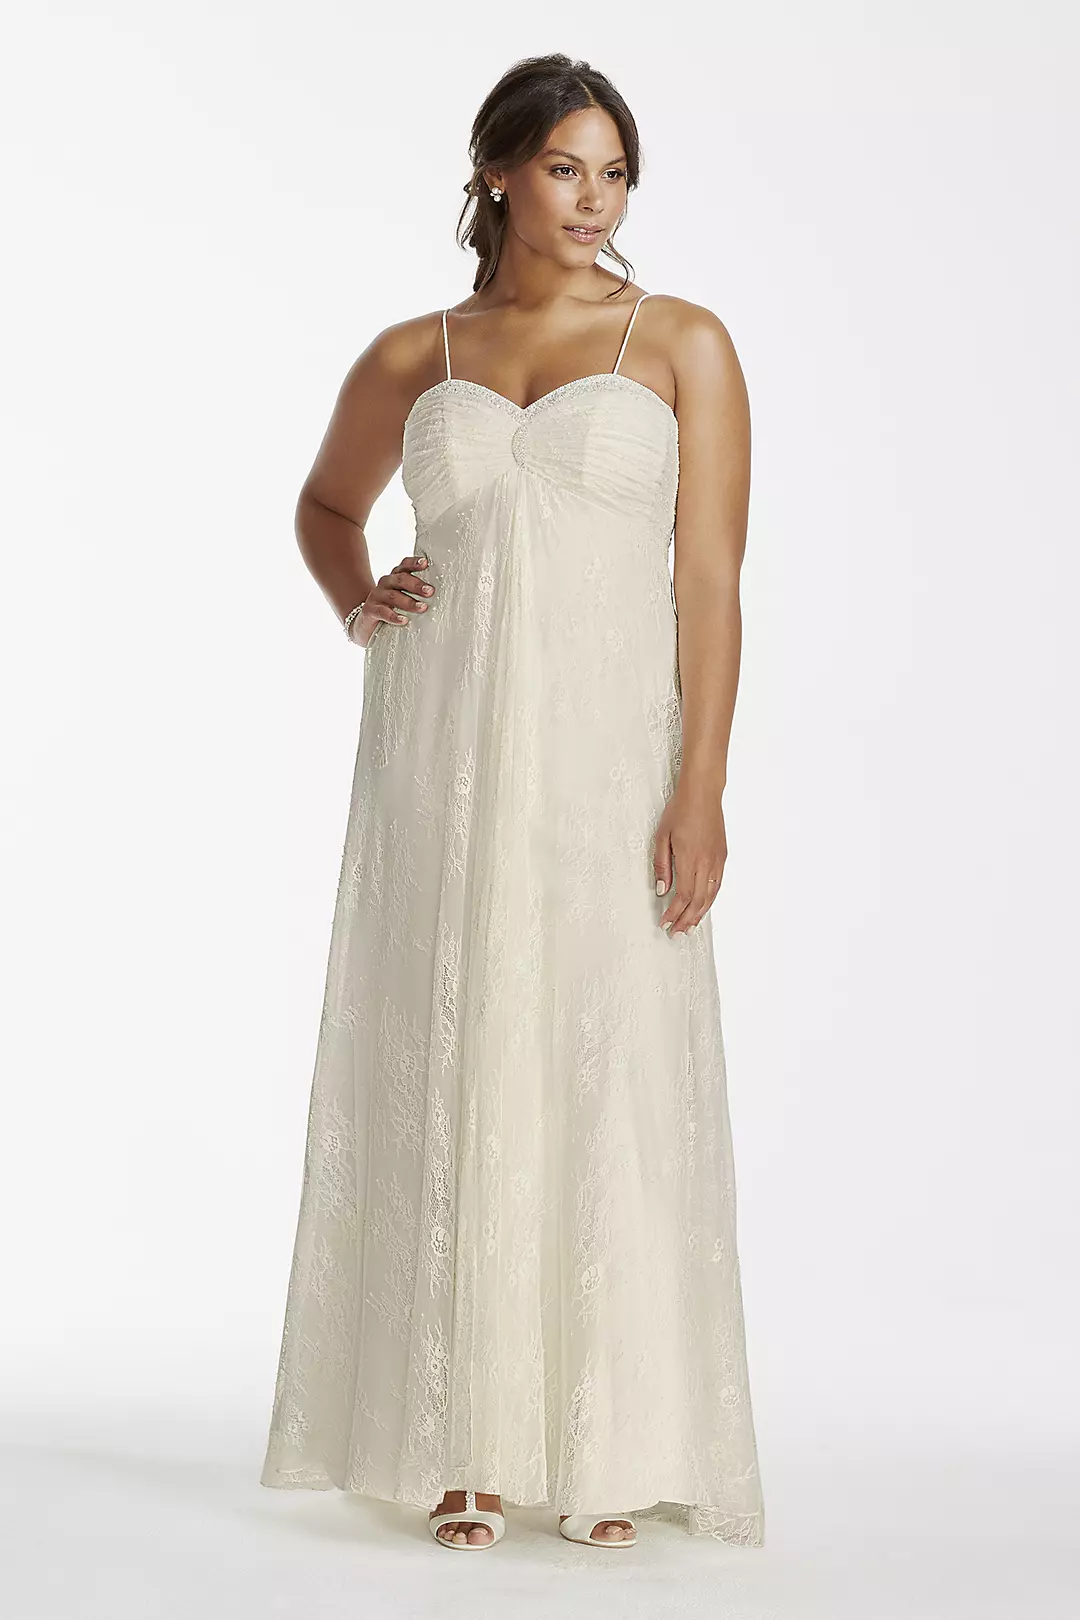 Spaghetti Strap Lace Plus Size Wedding Dress Image